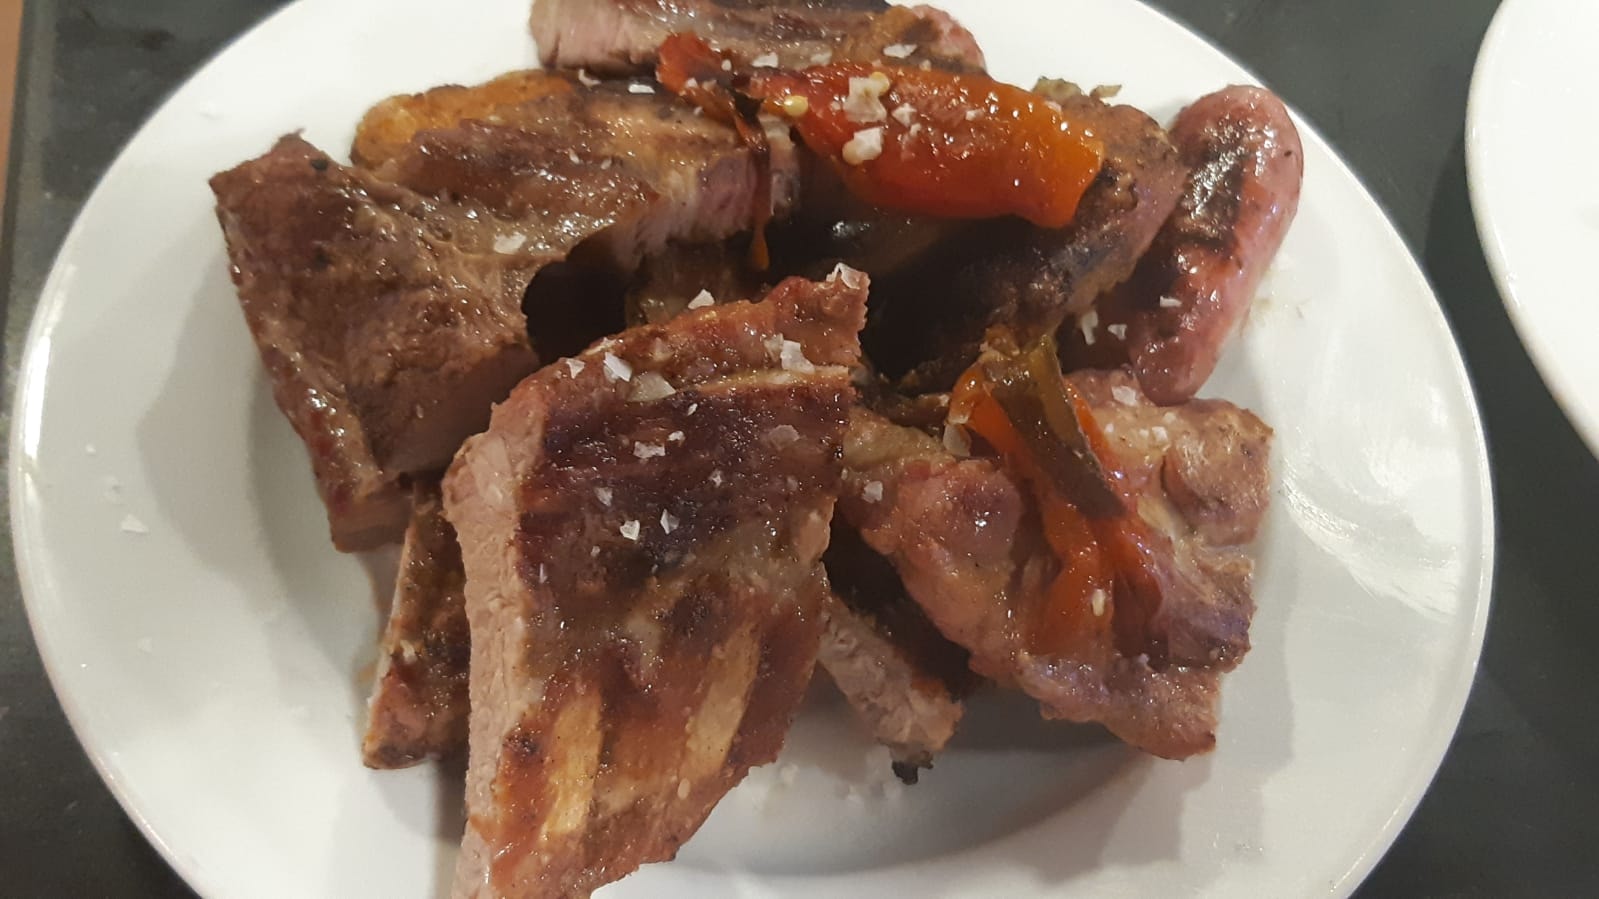 carne-pimientos-rojos-plato-restaurante-peregrinus-pontevedra-vigo-galicia.jpg